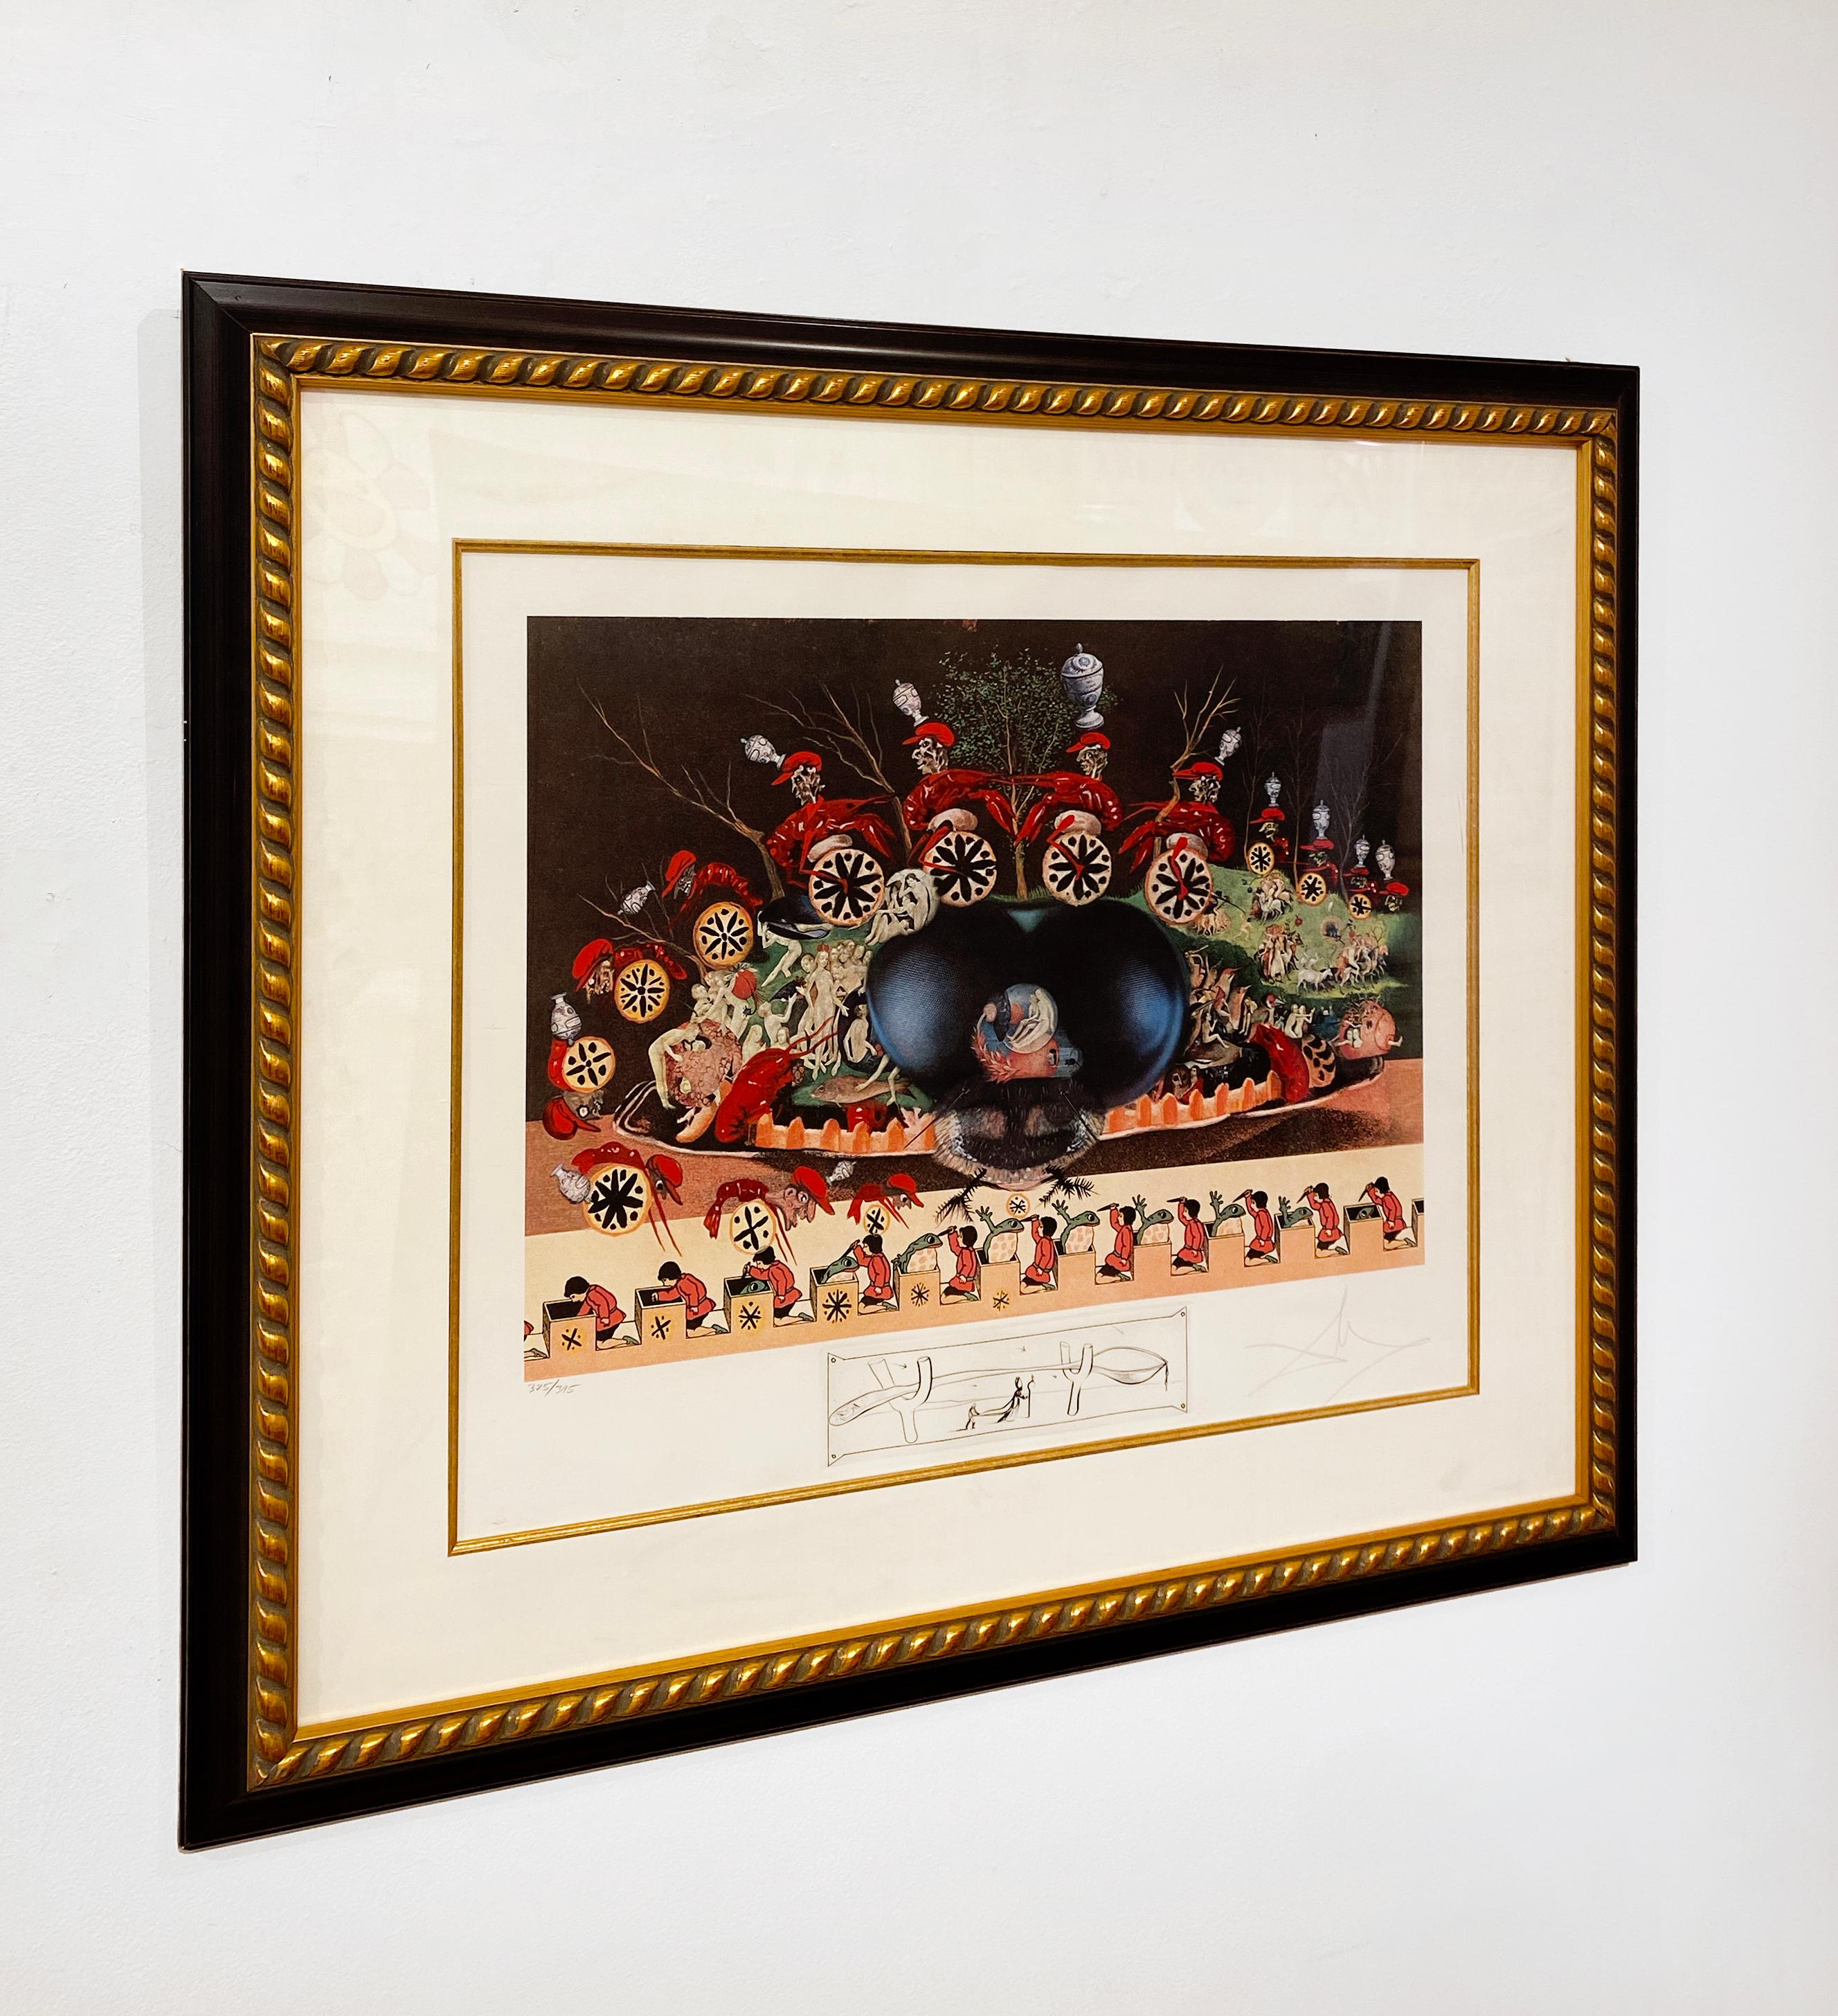 Artist:  Dali, Salvador
Title:  Les montres molles demi sommeil
Series:  Les Diners de Gala (Gala’s Dinners)
Date:  1975
Medium:  Photolithograph
Unframed Dimensions: 18.9